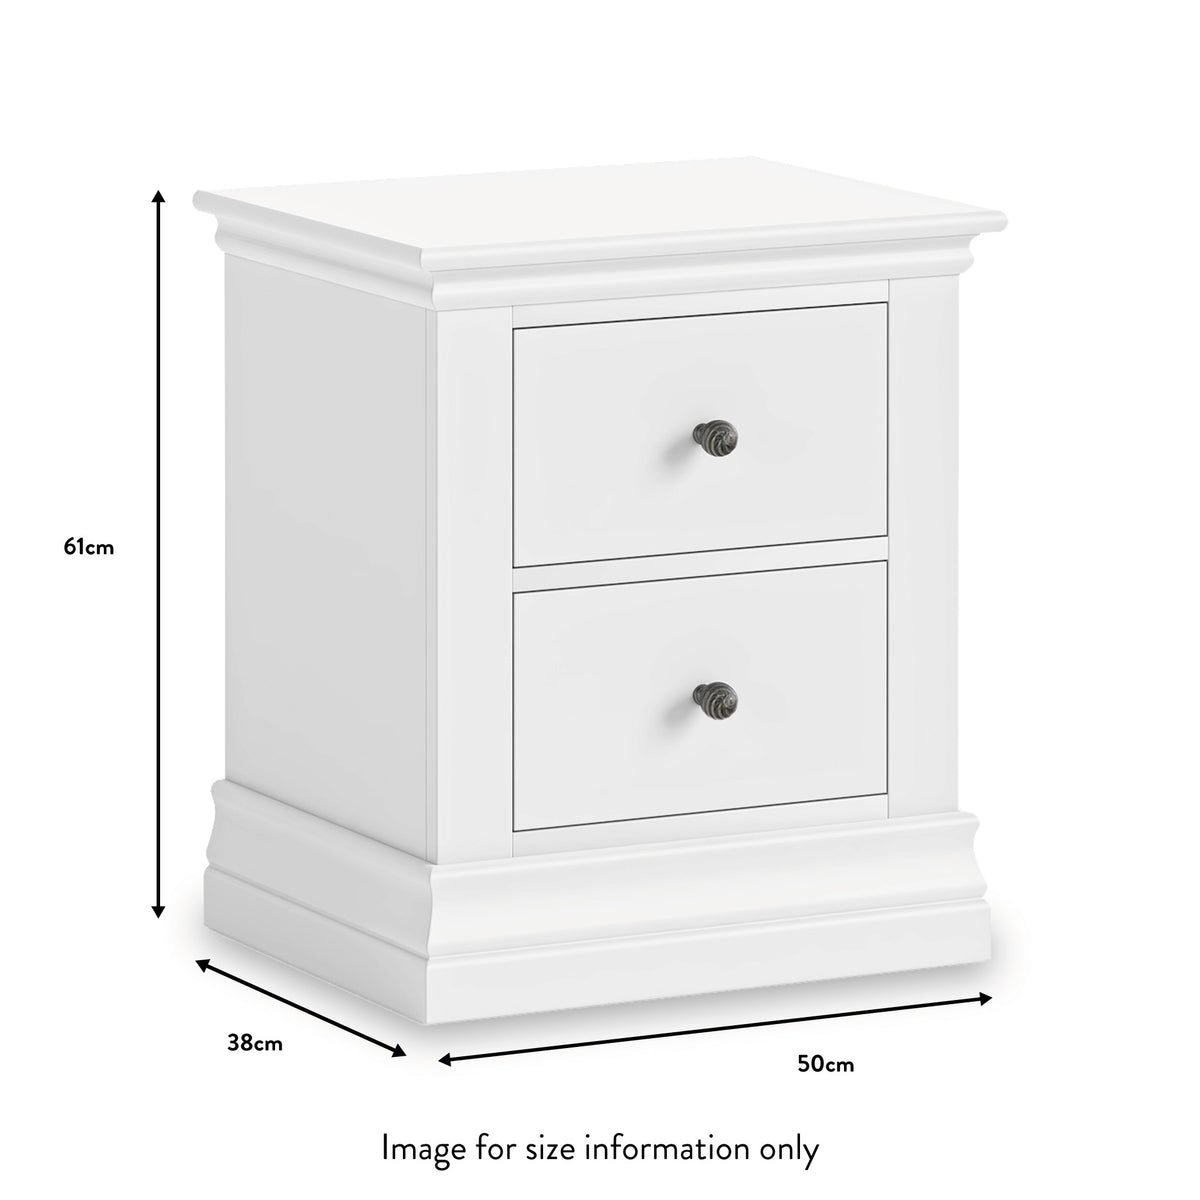 Porter White 2 Drawer Bedside Table dimensions